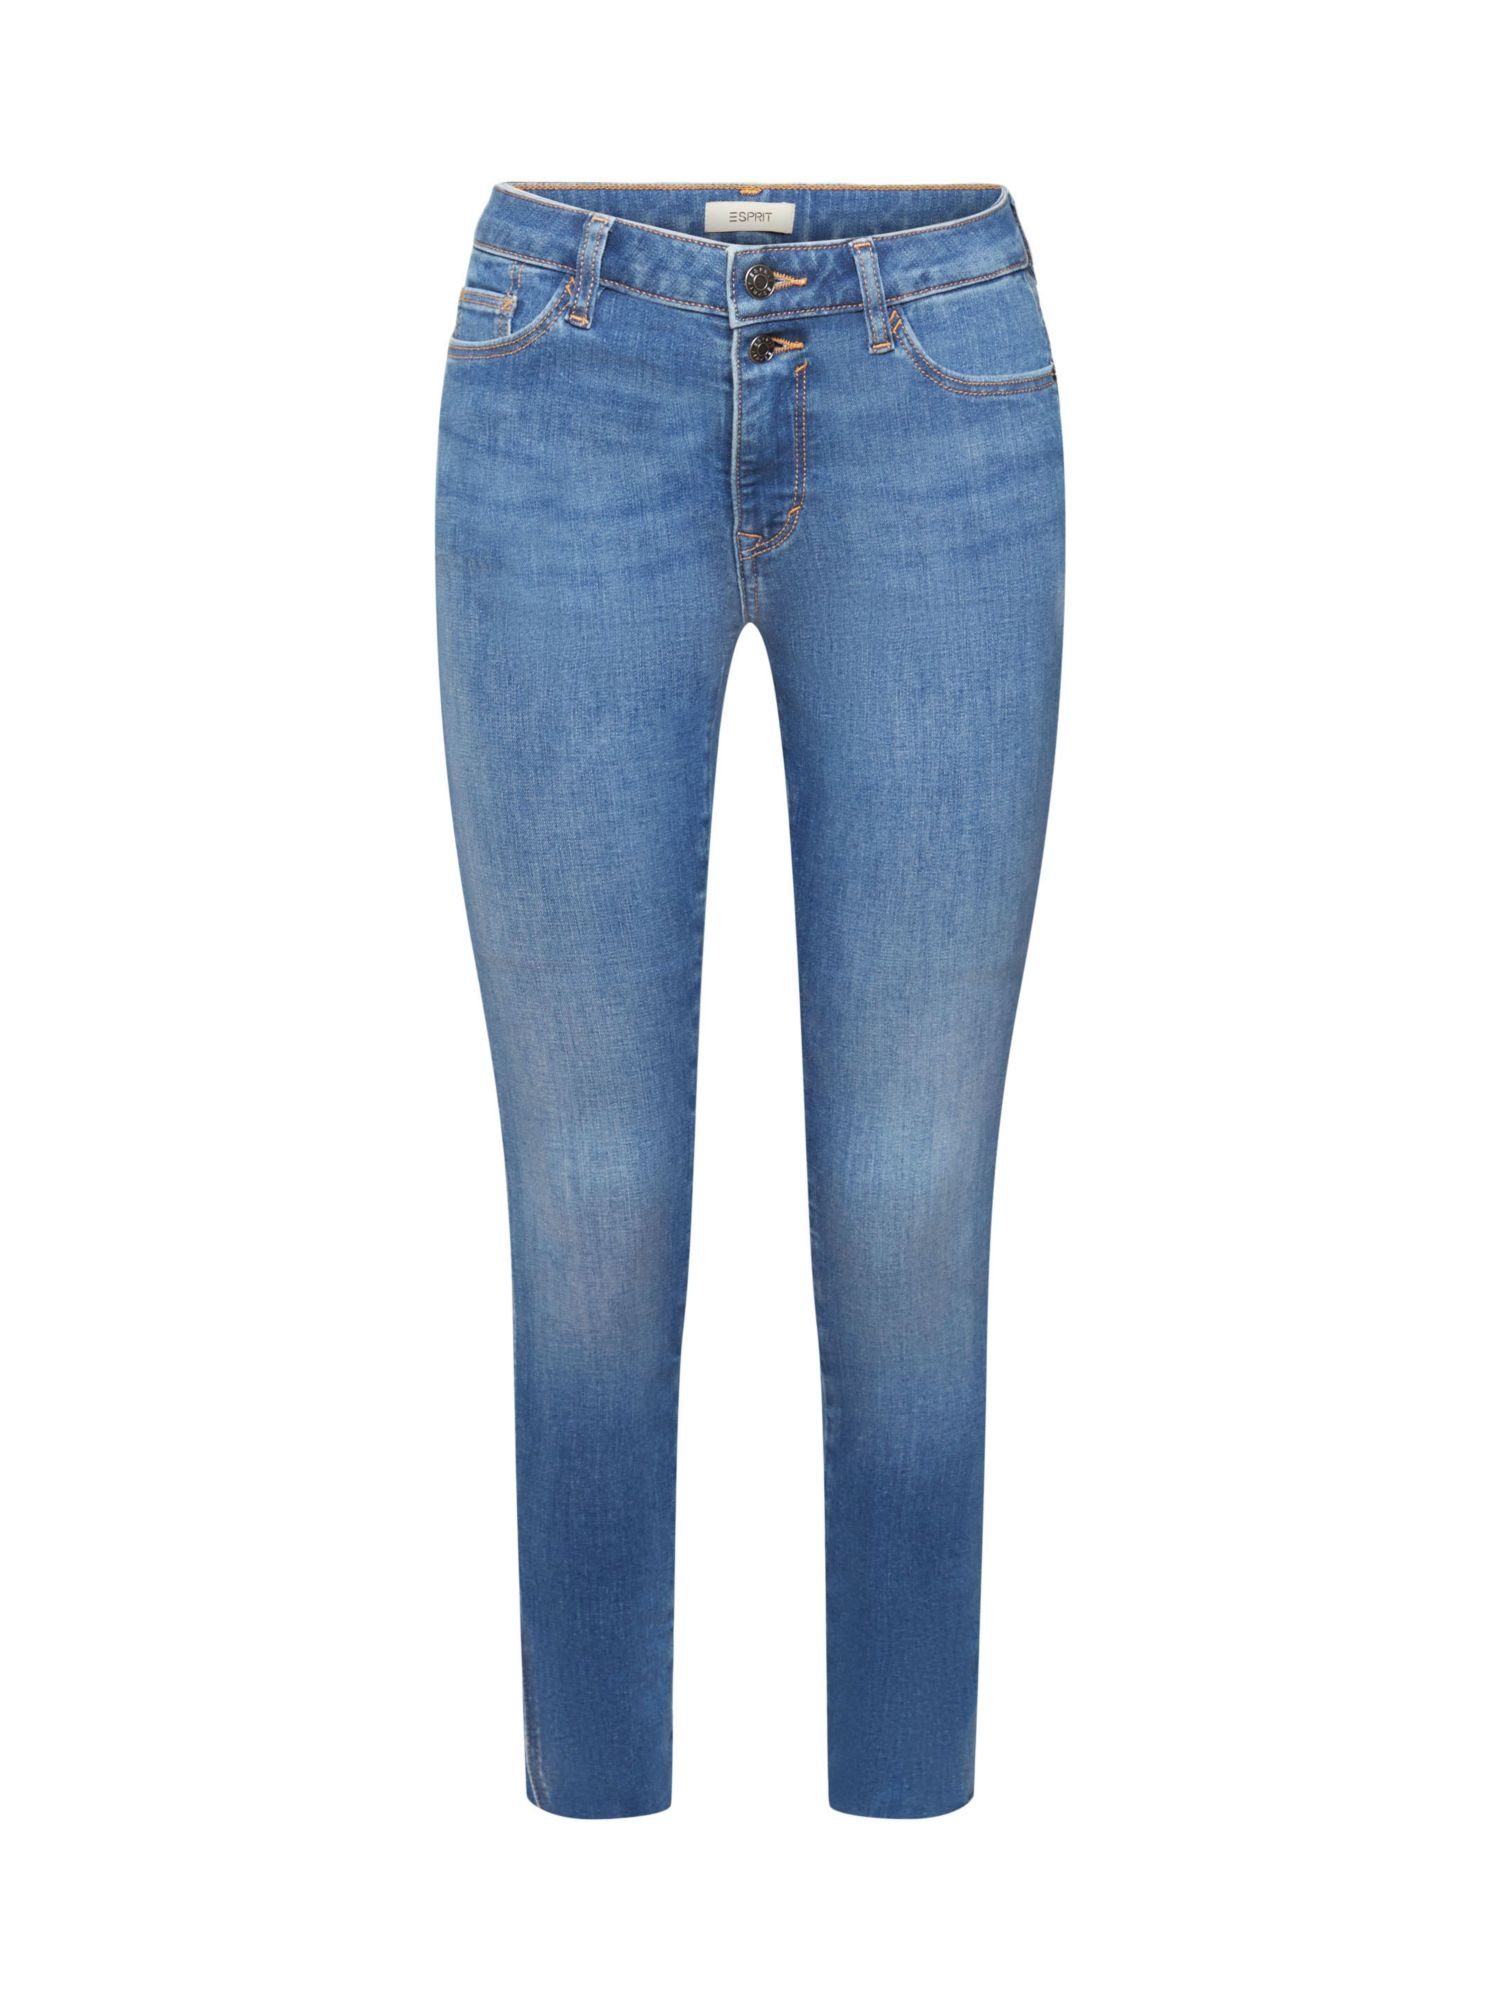 Esprit Stretch-Jeans Stretchige High-Rise-Jeans im Skinny Fit BLUE MEDIUM WASHED